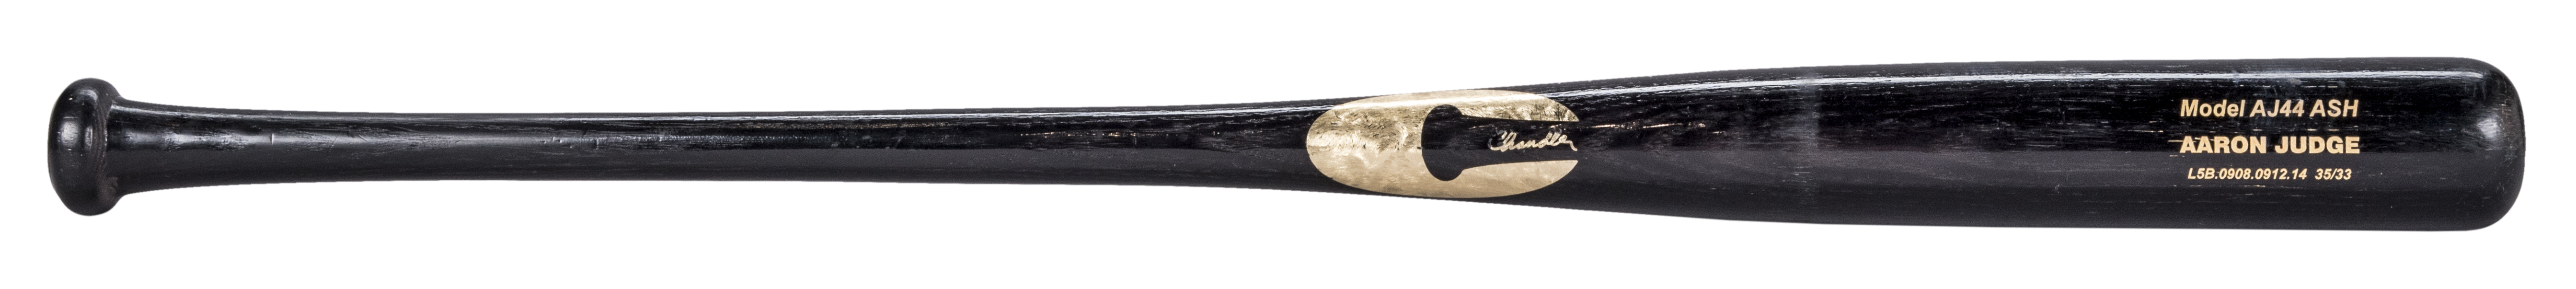 Lot Detail - 2014 Aaron Judge Game Used Chandler AJ44 Model Bat (PSA ...